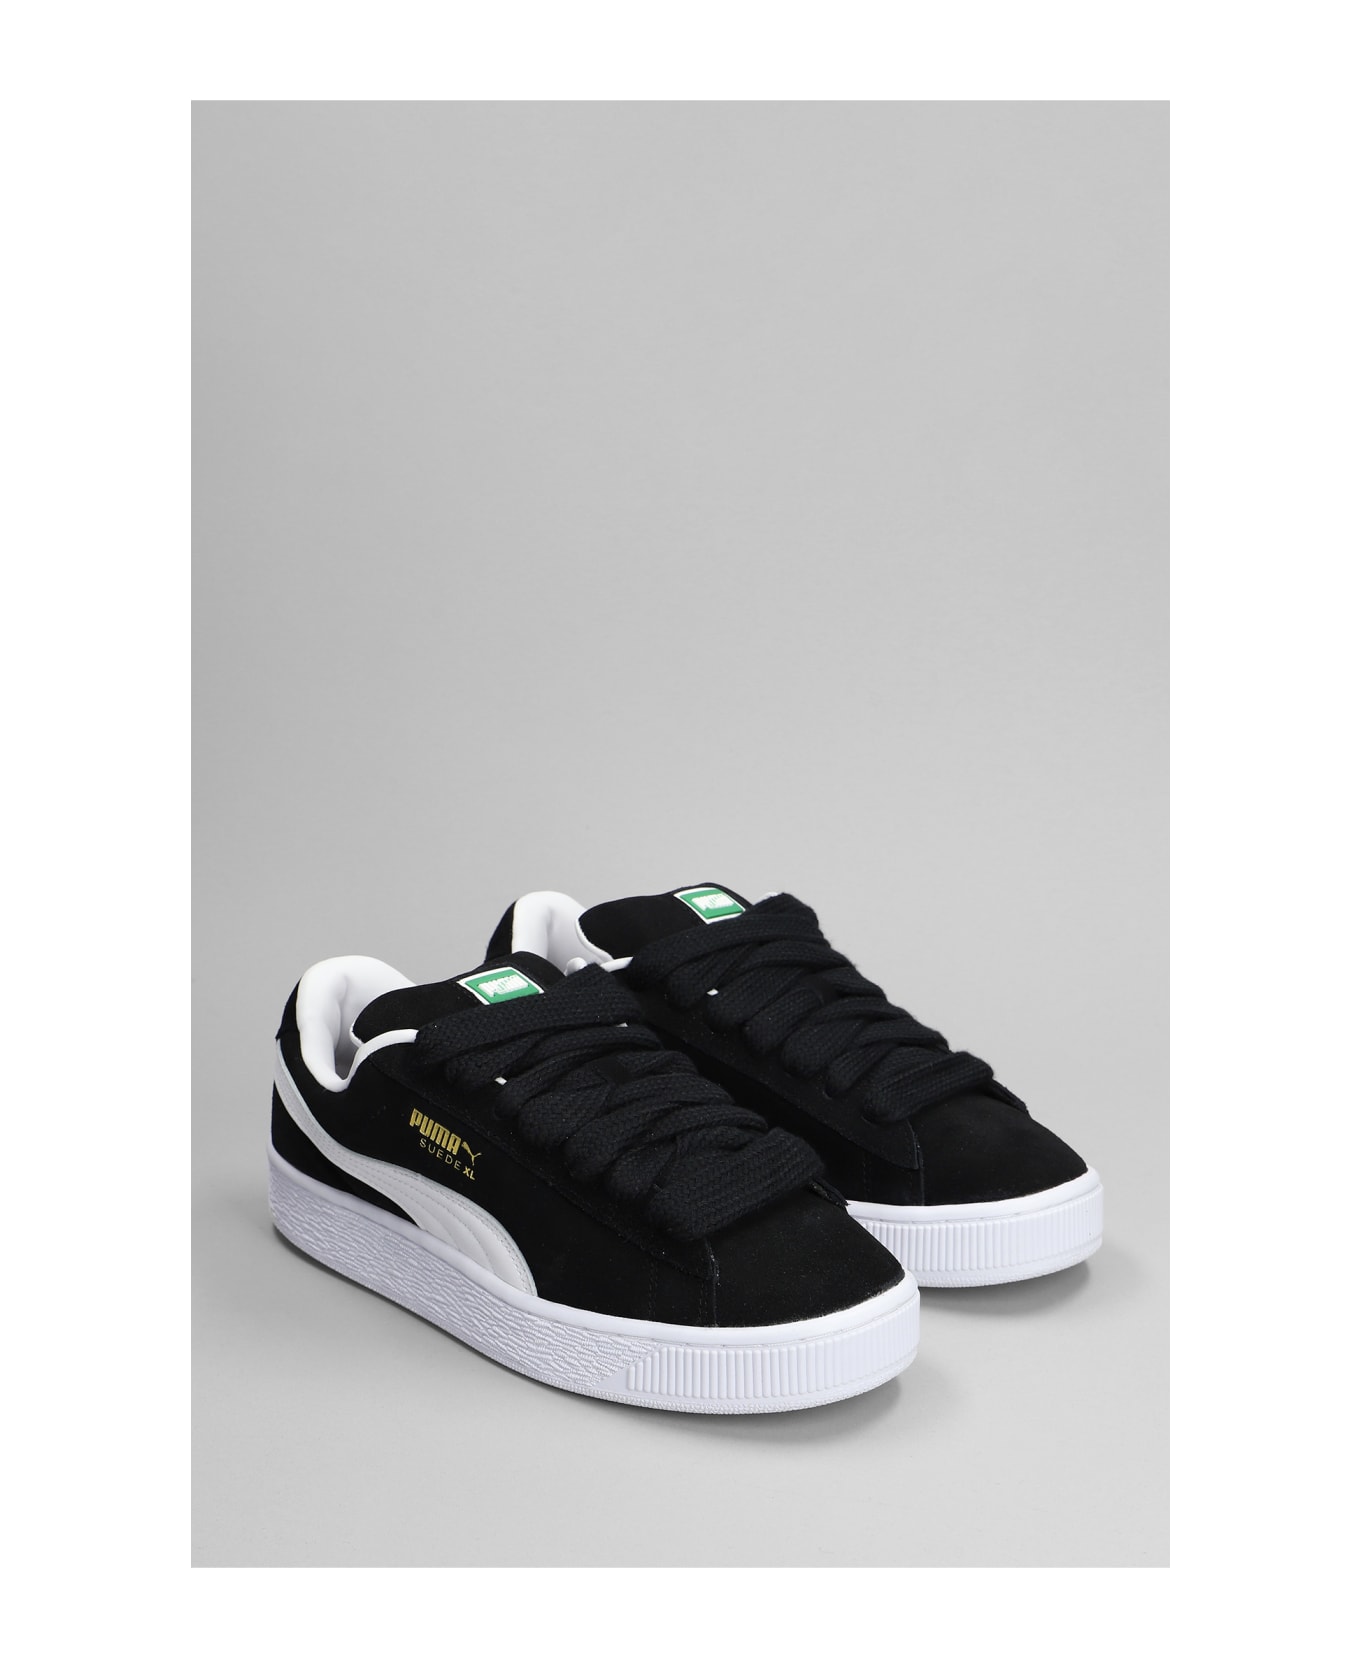 Puma Suede Xl Sneakers In Black Suede - Black